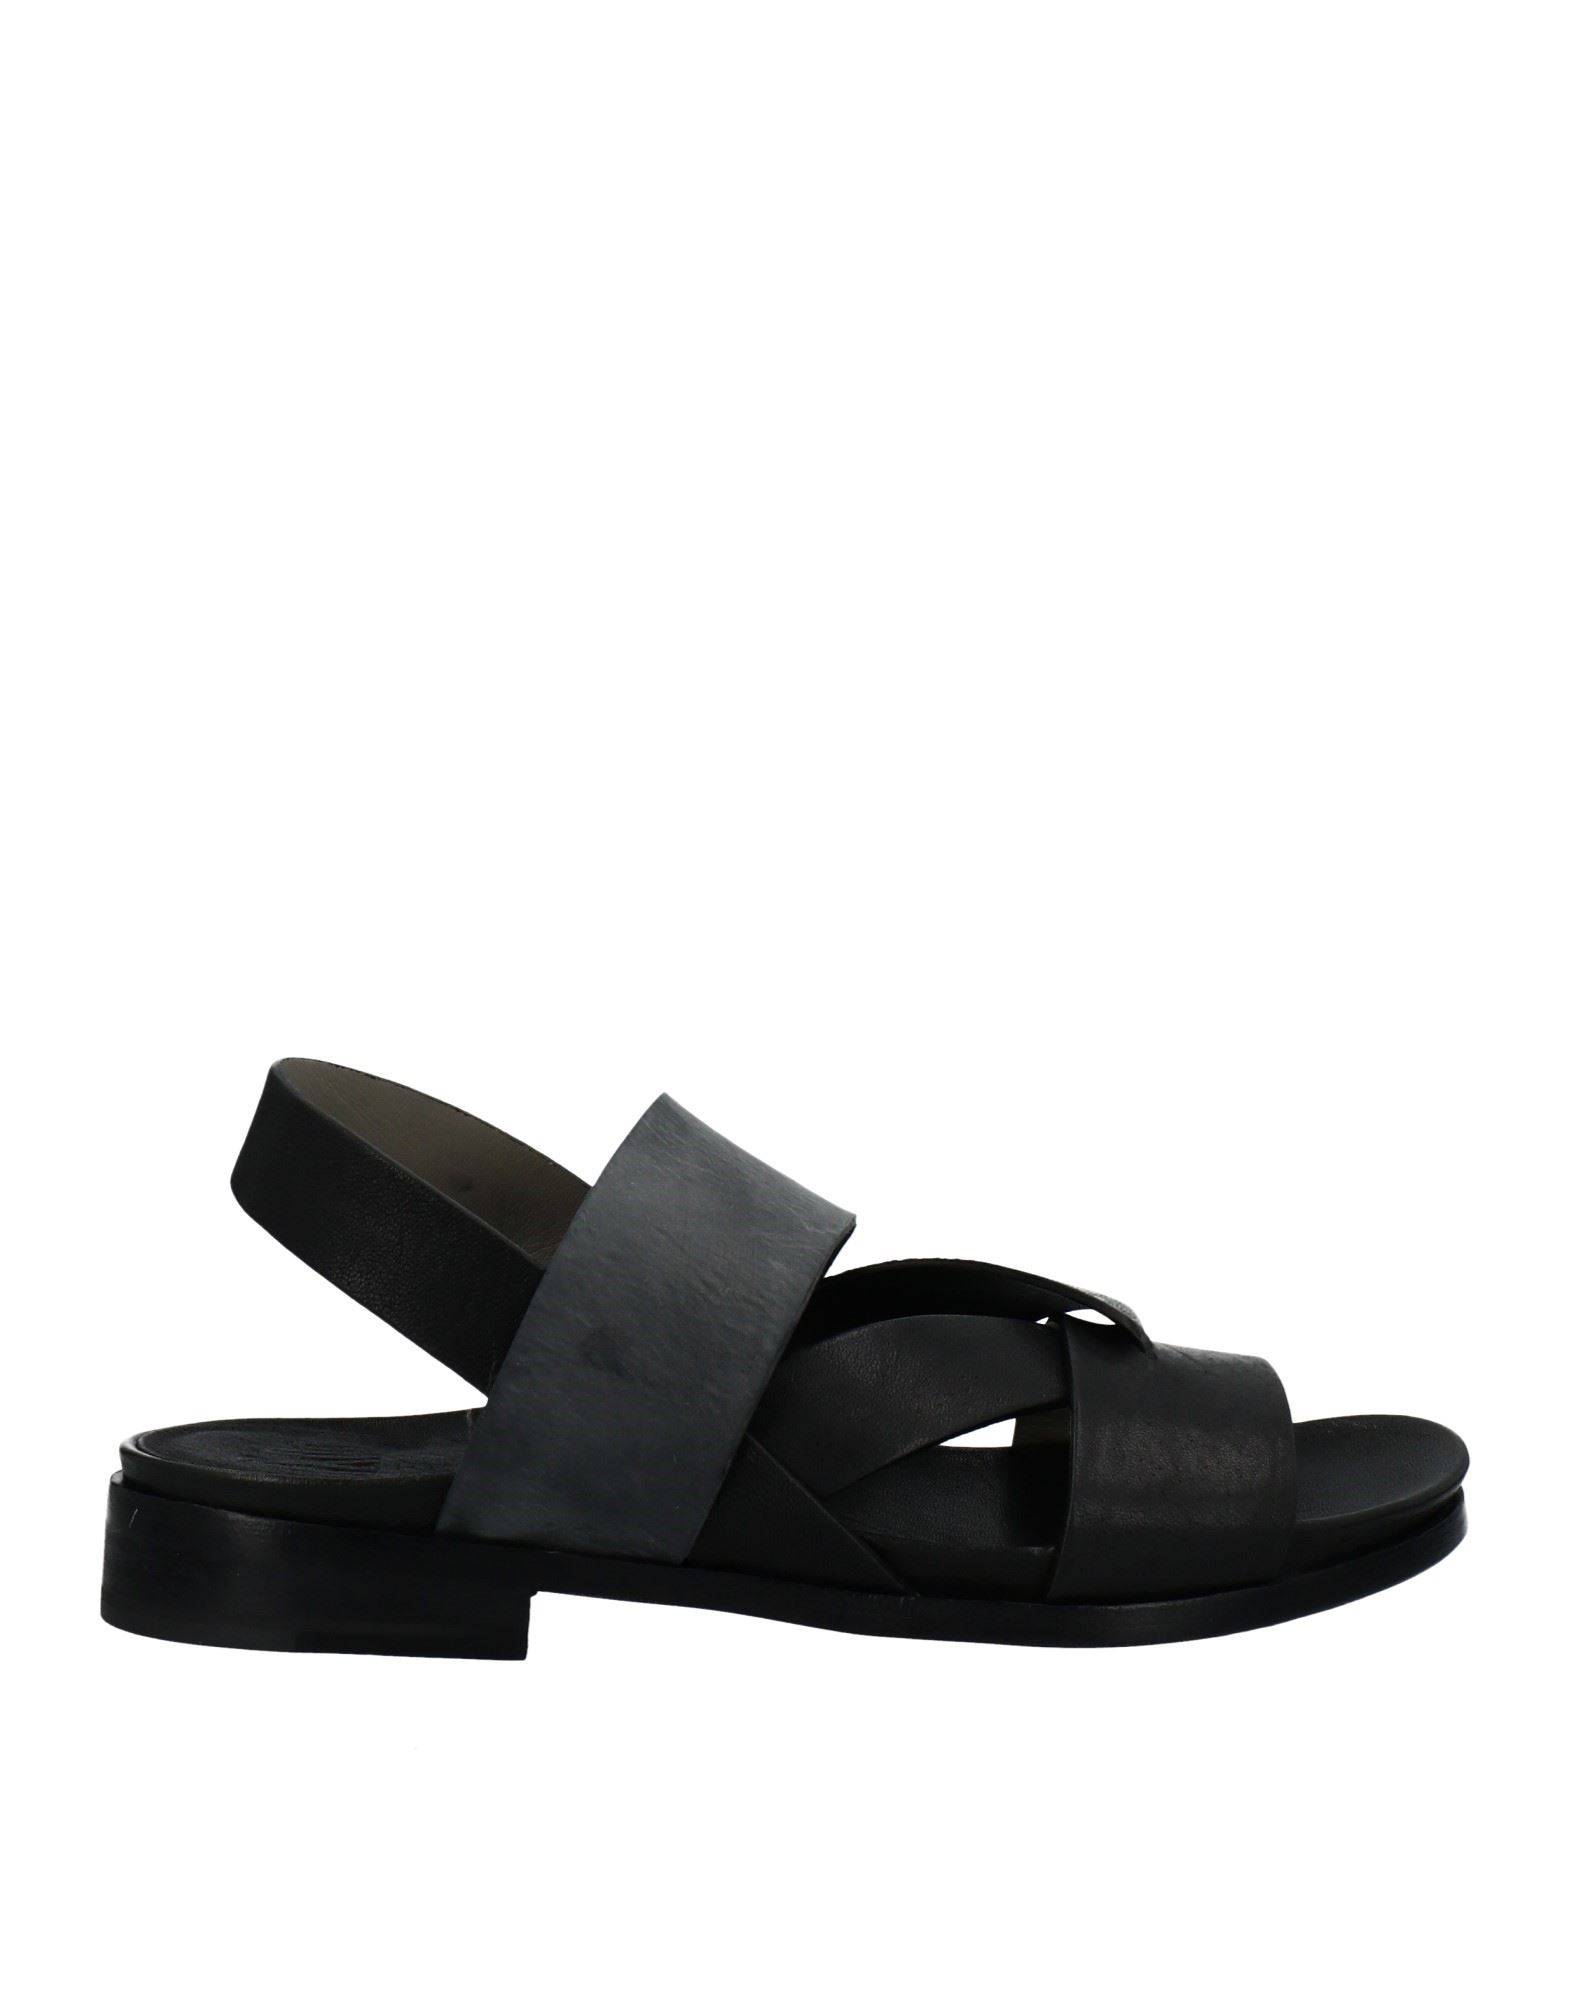 Ixos Sandals In Black